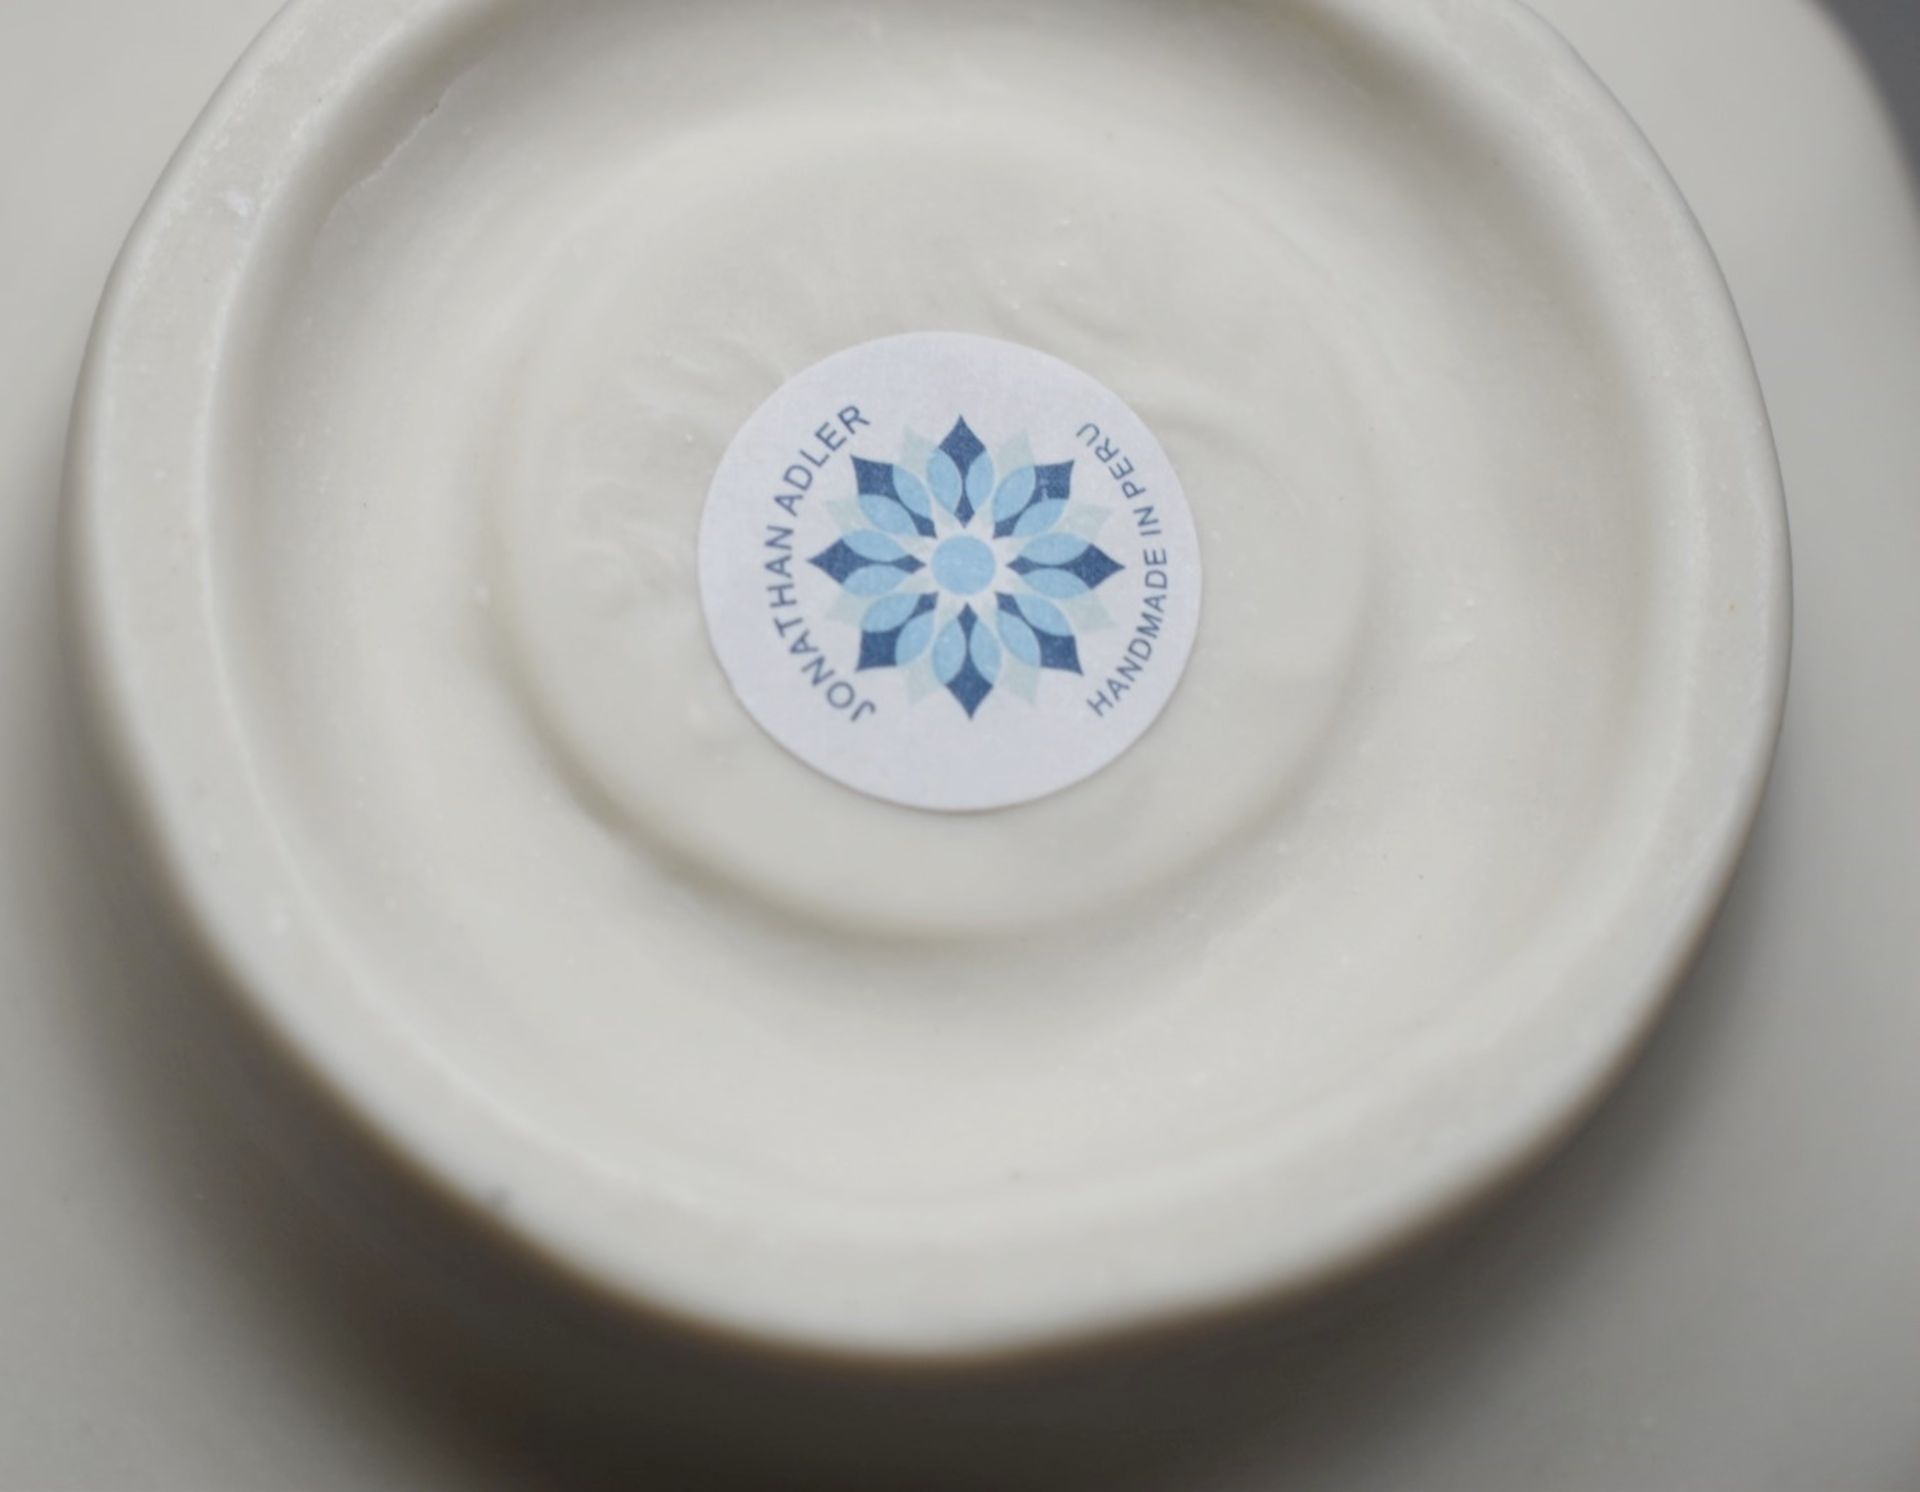 1 x JONATHAN ADLER 'Ja Muse - Dora Maar' Luxury Porcelain Vase - 23cm High - Original Price £295.00 - Image 11 of 13